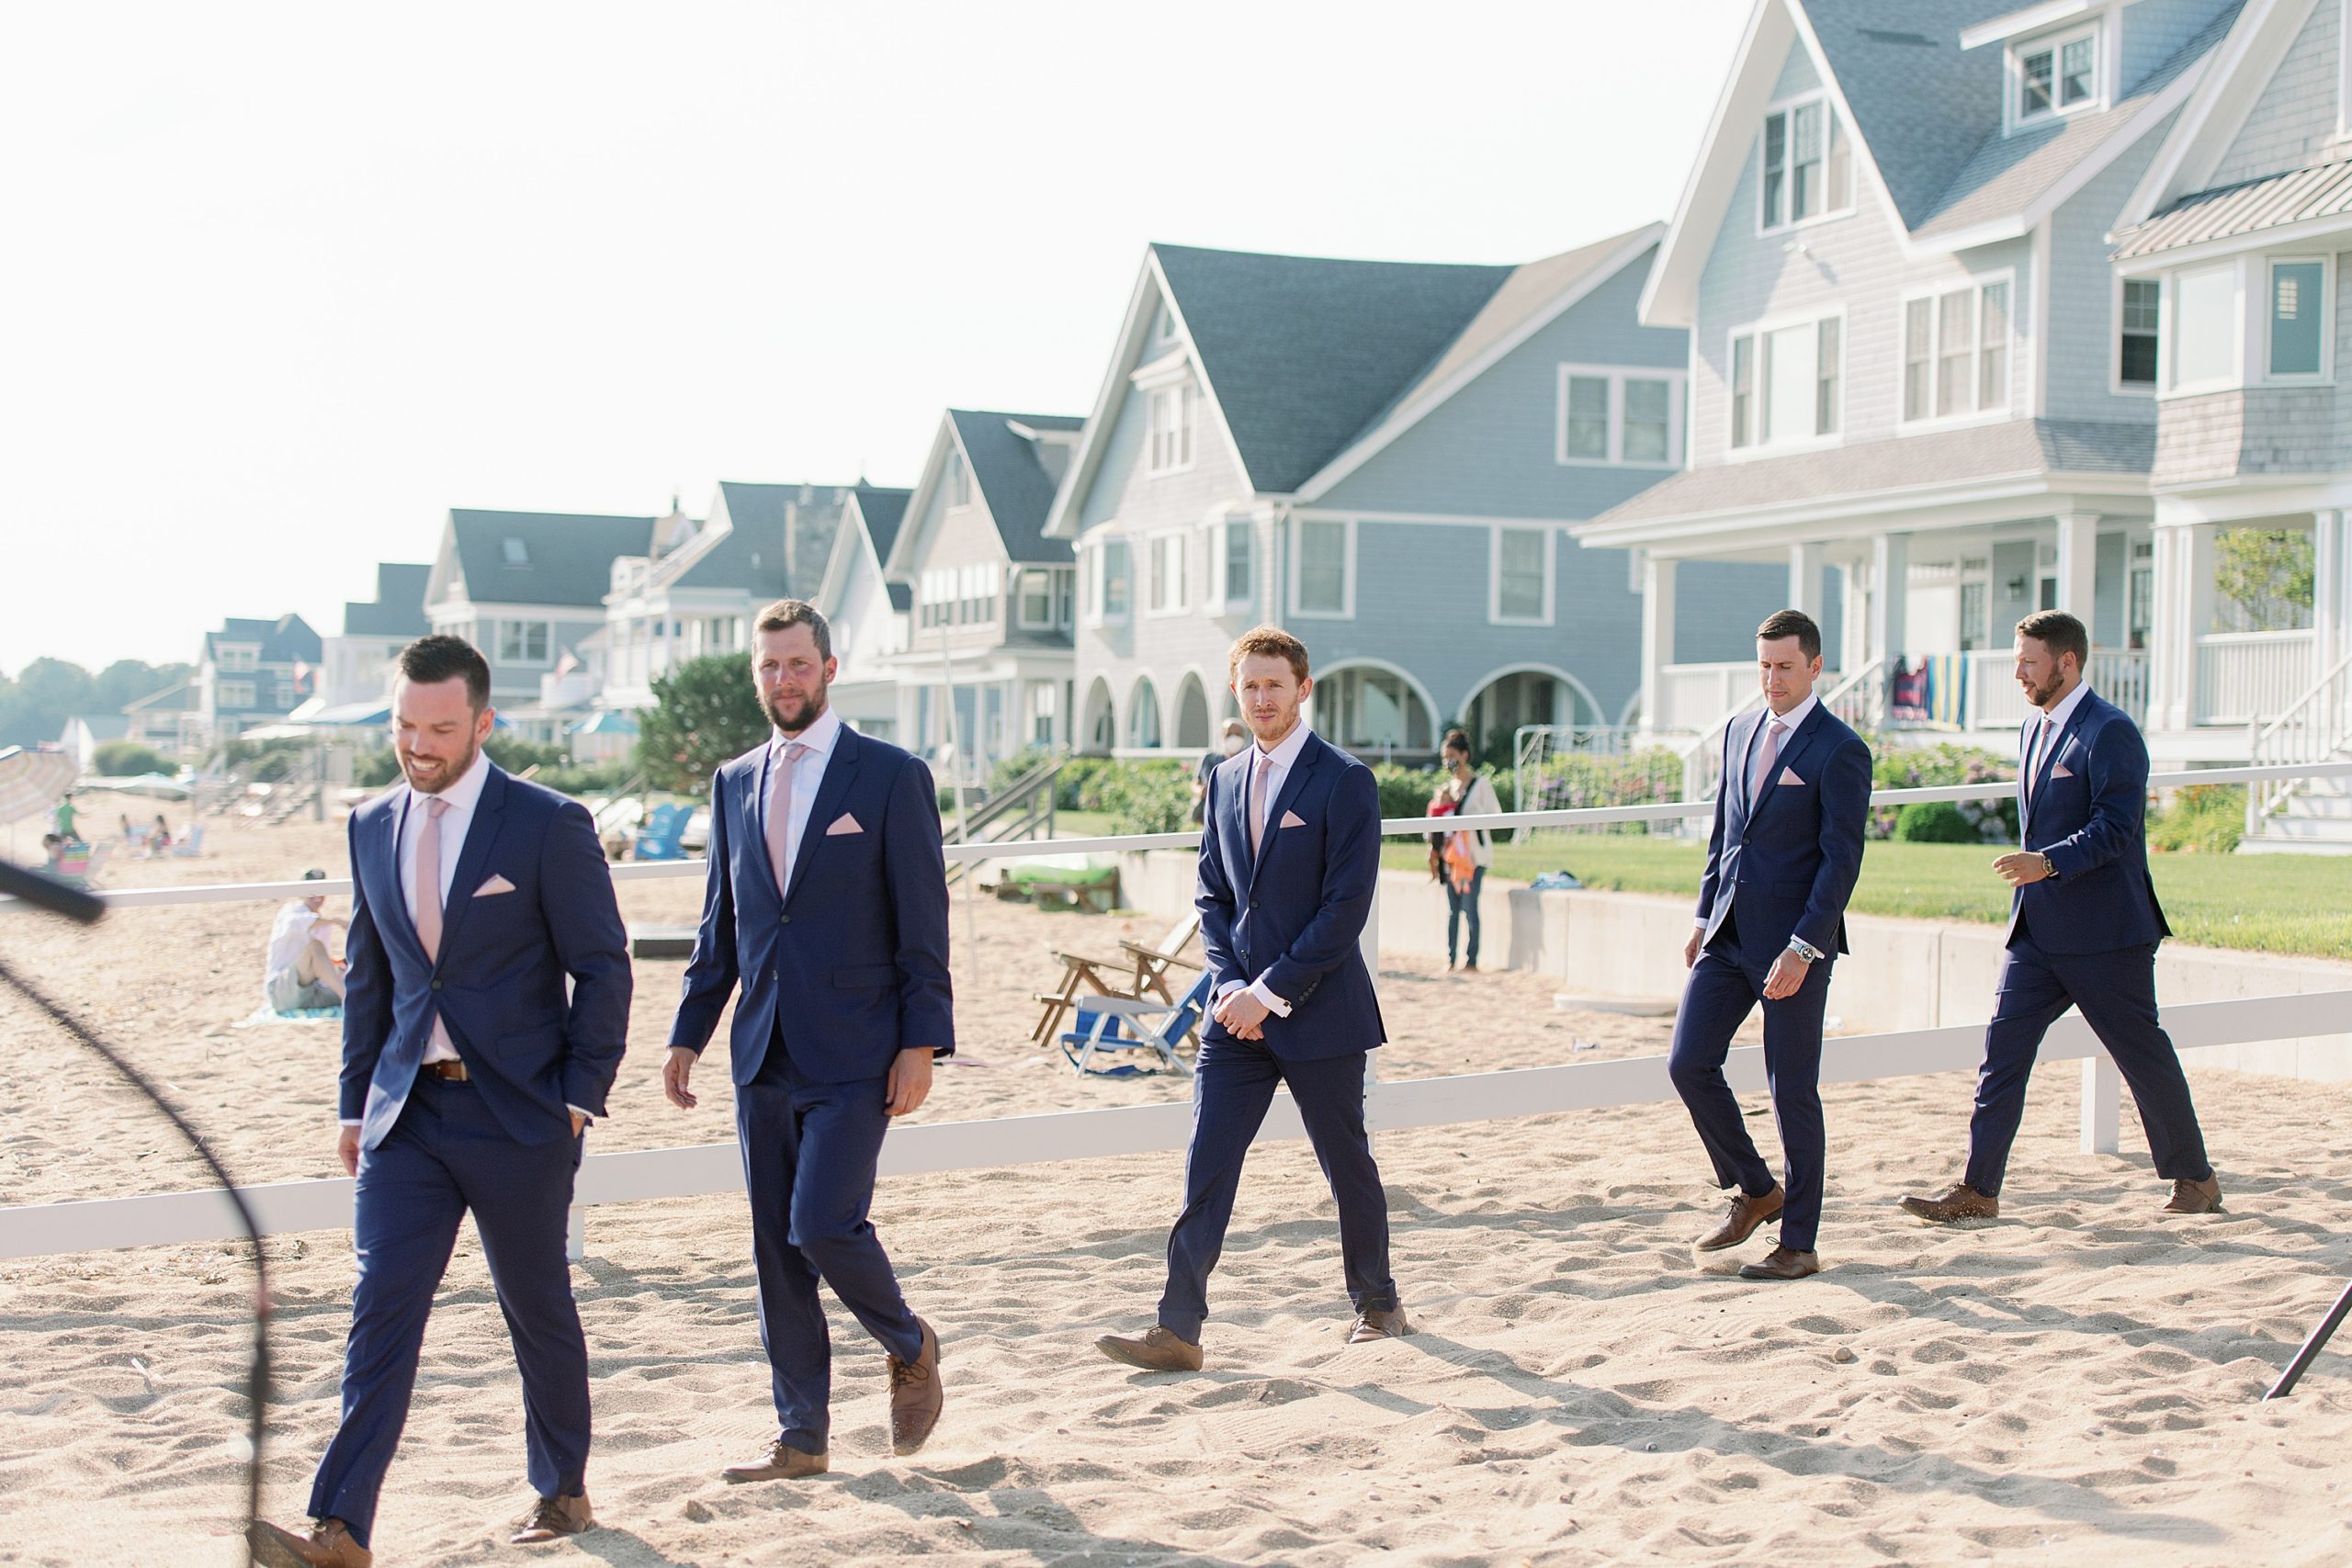 Madison Beach Hotel Micro Wedding ceremony by the ocean